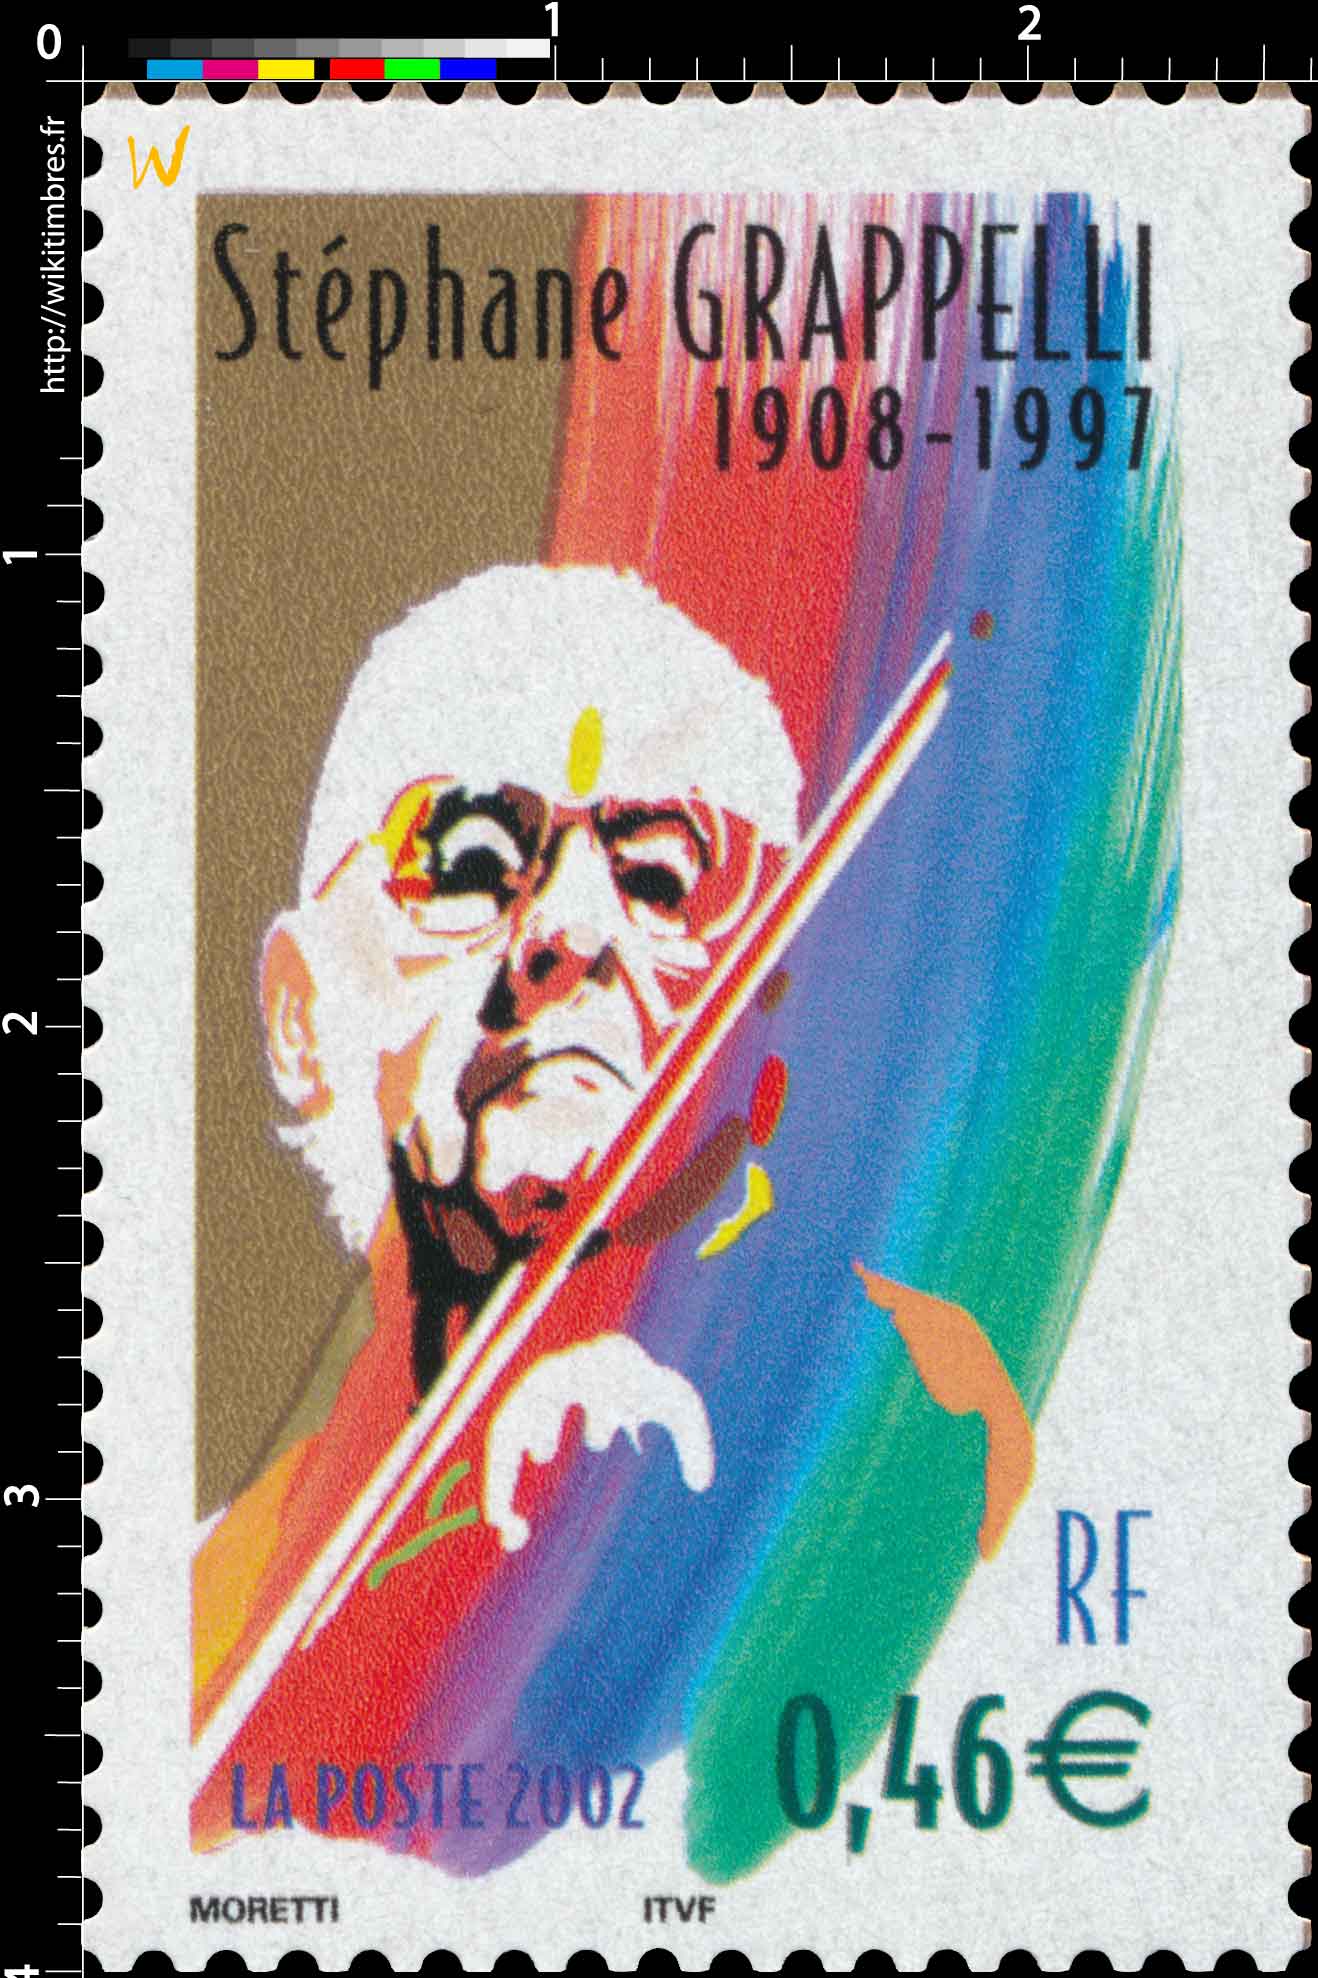 2002 Stéphane GRAPPELLI 1908-1997